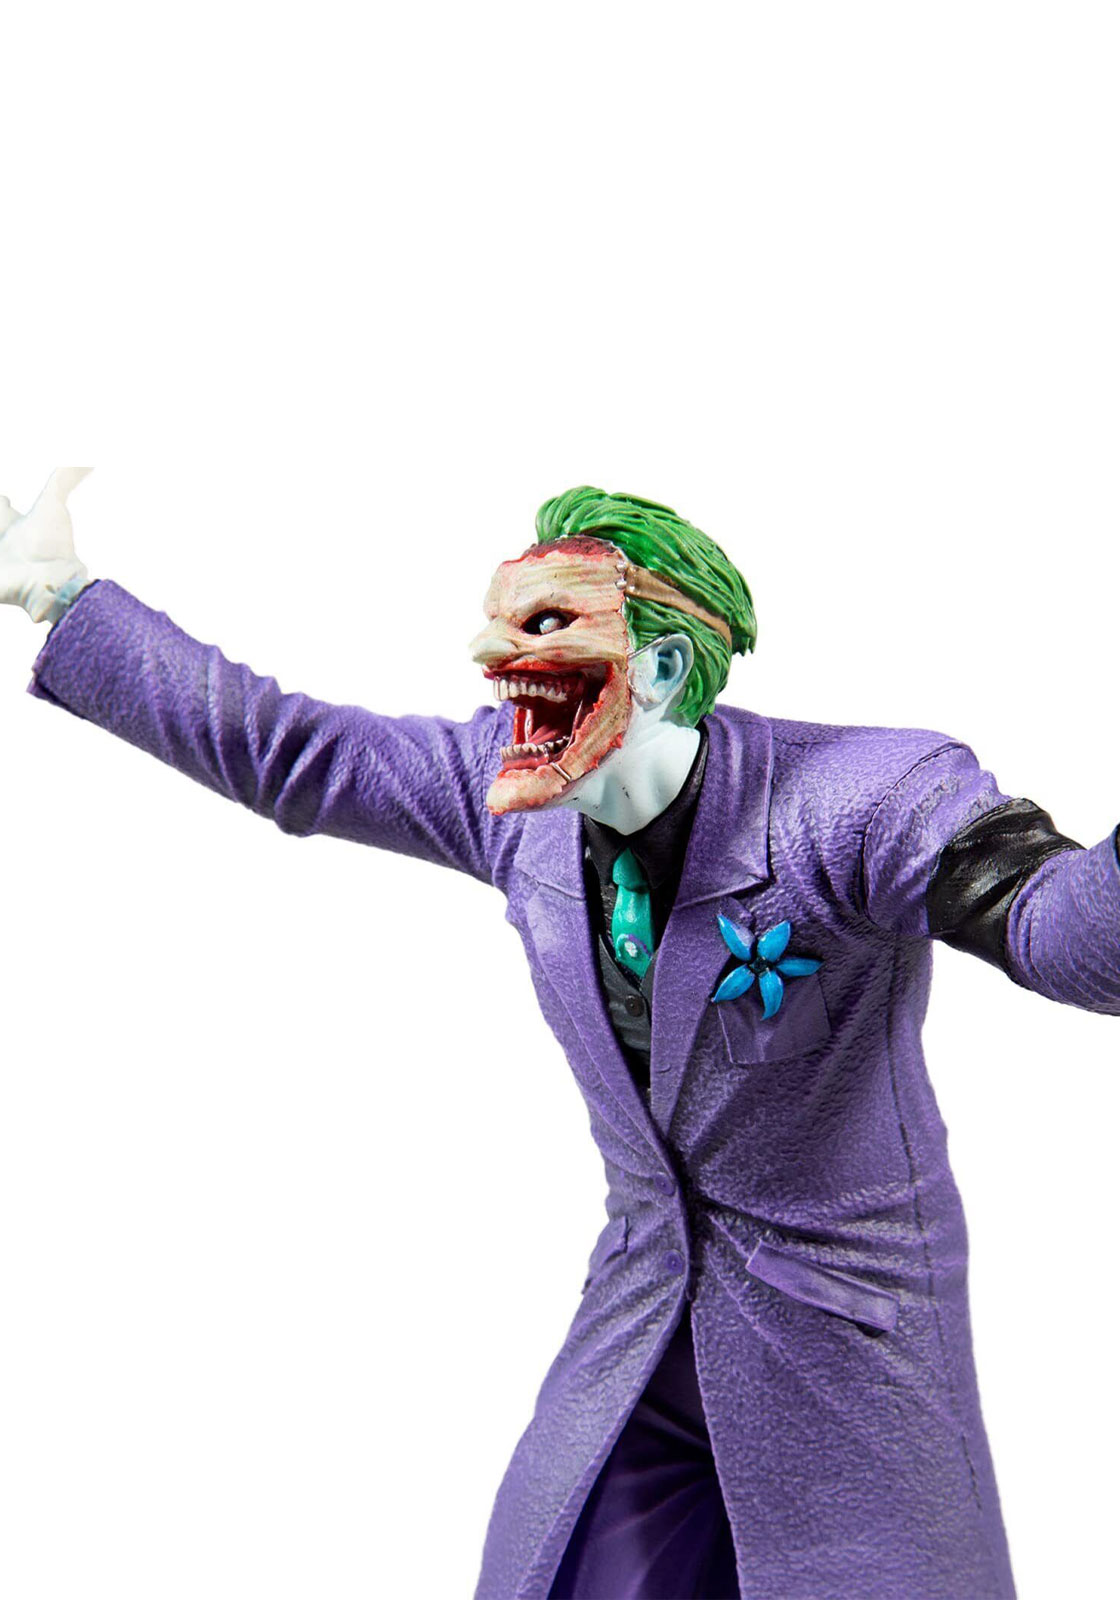 Statue DC Comics - The Joker Purple Craze - by Greg Capullo 